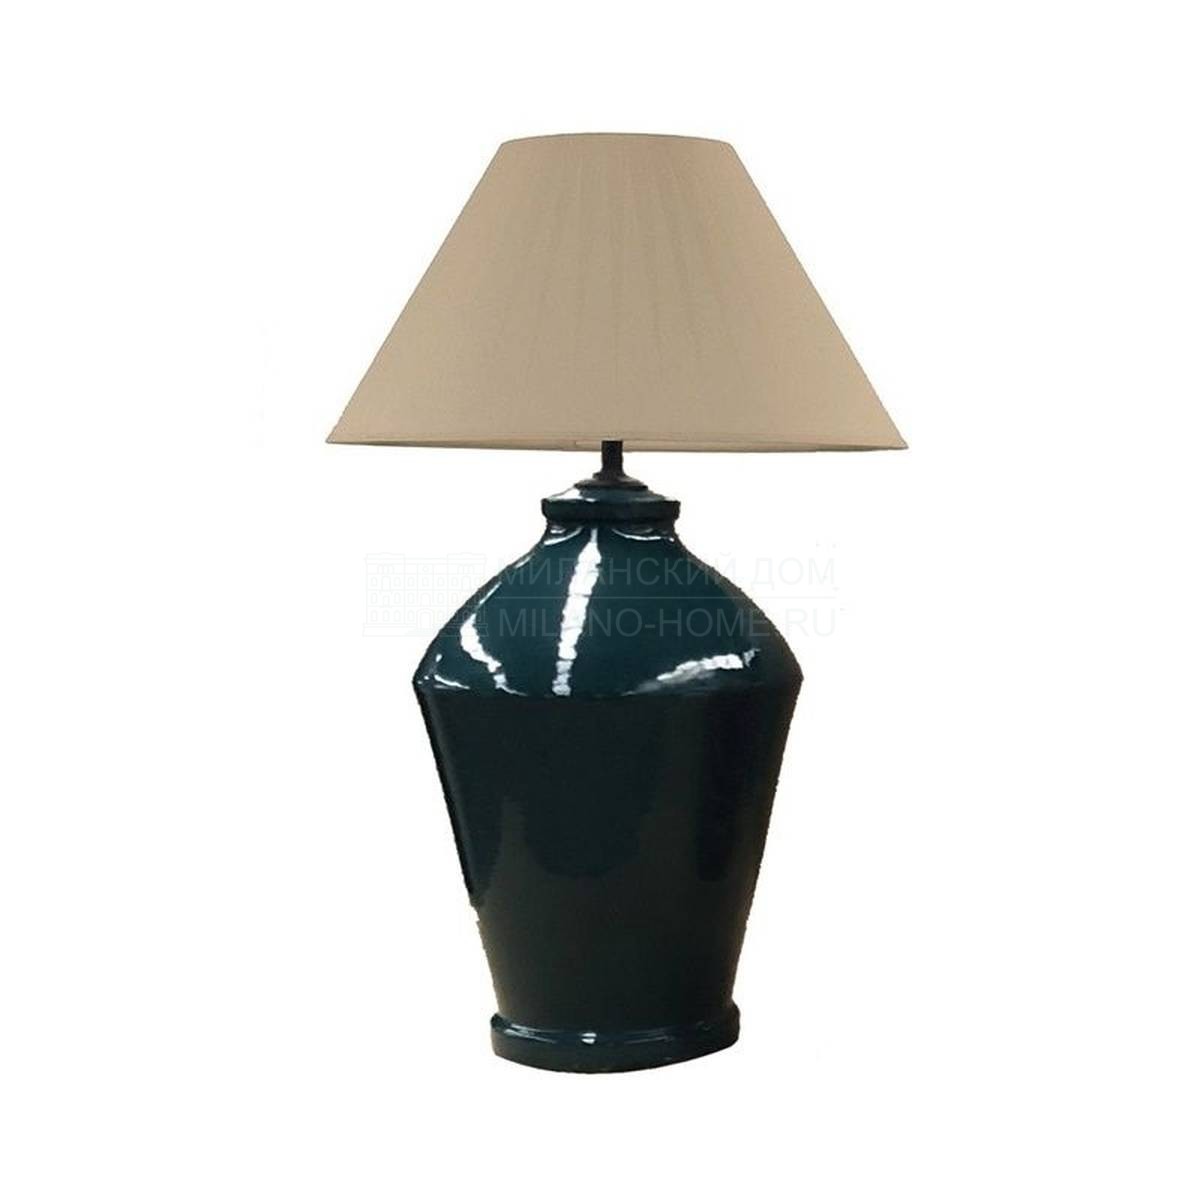 Настольная лампа 756 table lamp из Испании фабрики GUADARTE